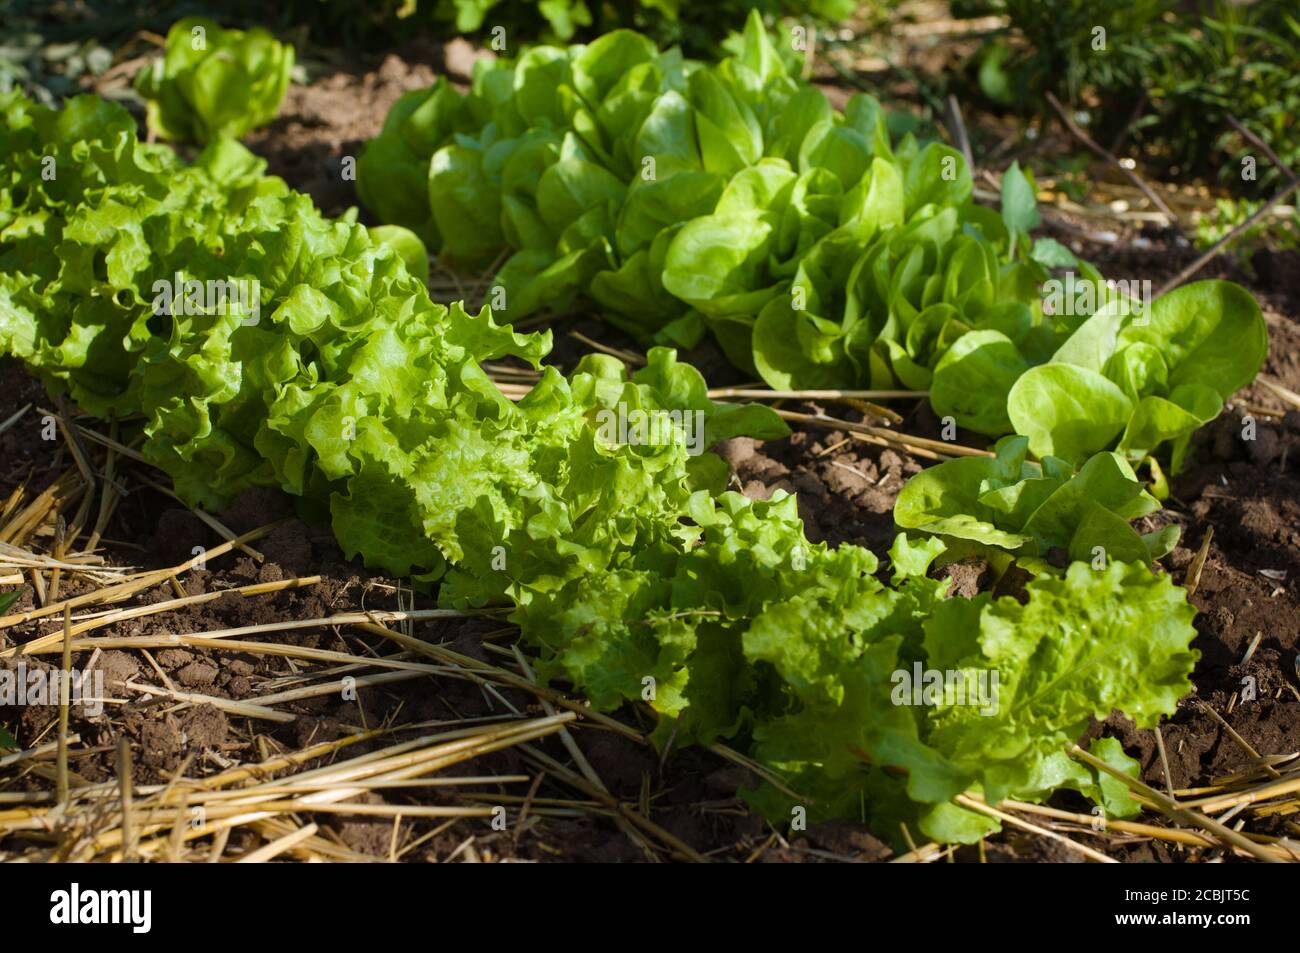 Salad growing Stock Photo